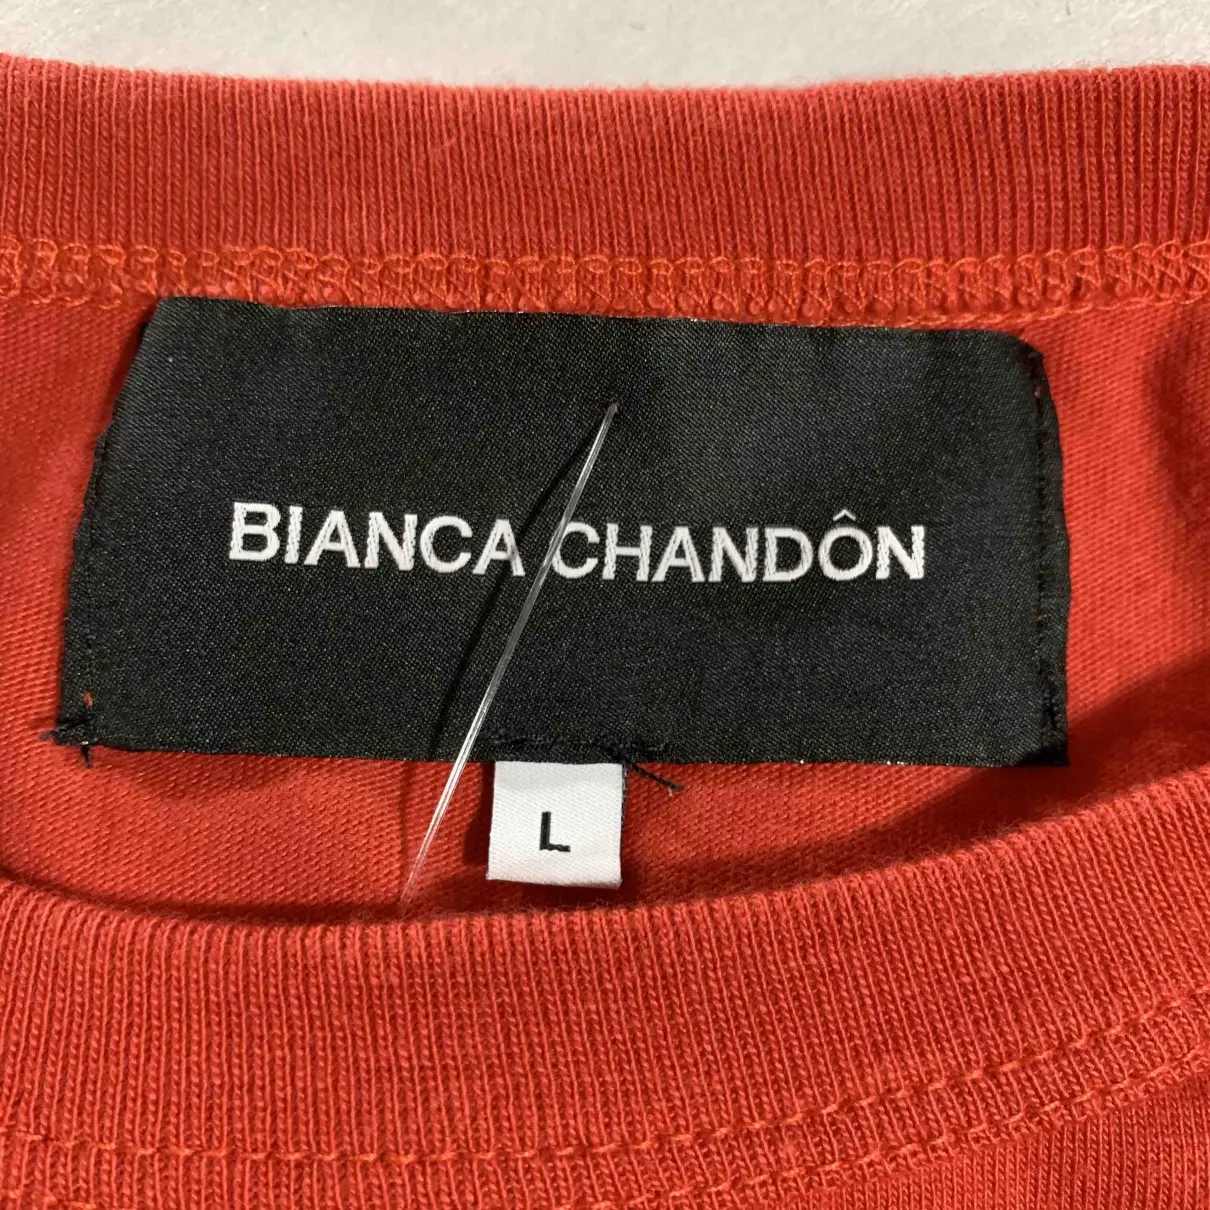 Buy BIANCA CHANDON T-shirt online